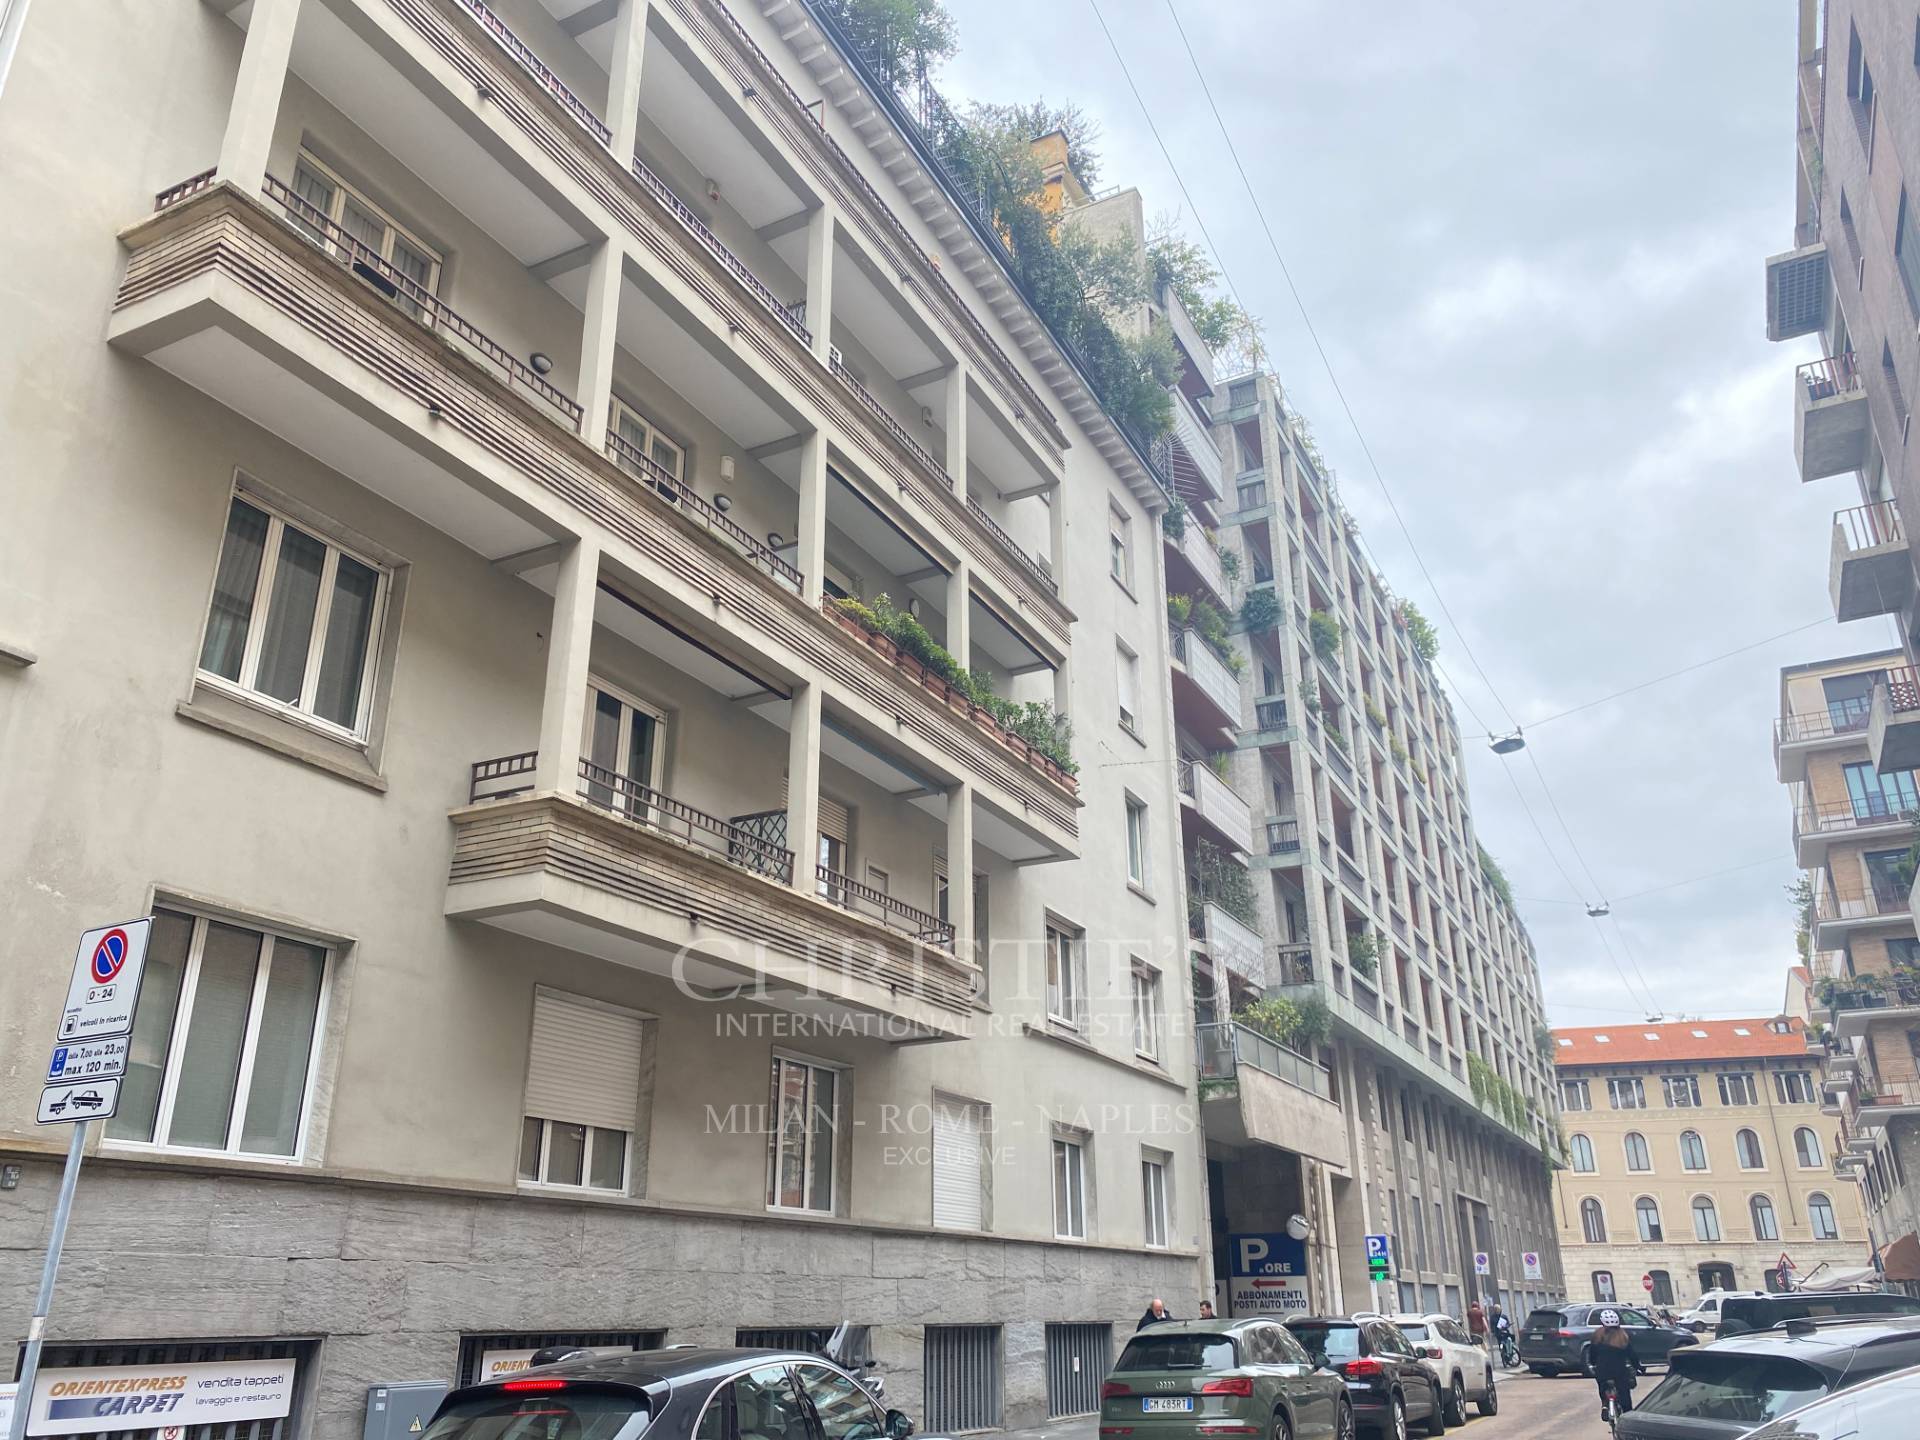 picture of Elegant Apartment In Via Matteo Bandello